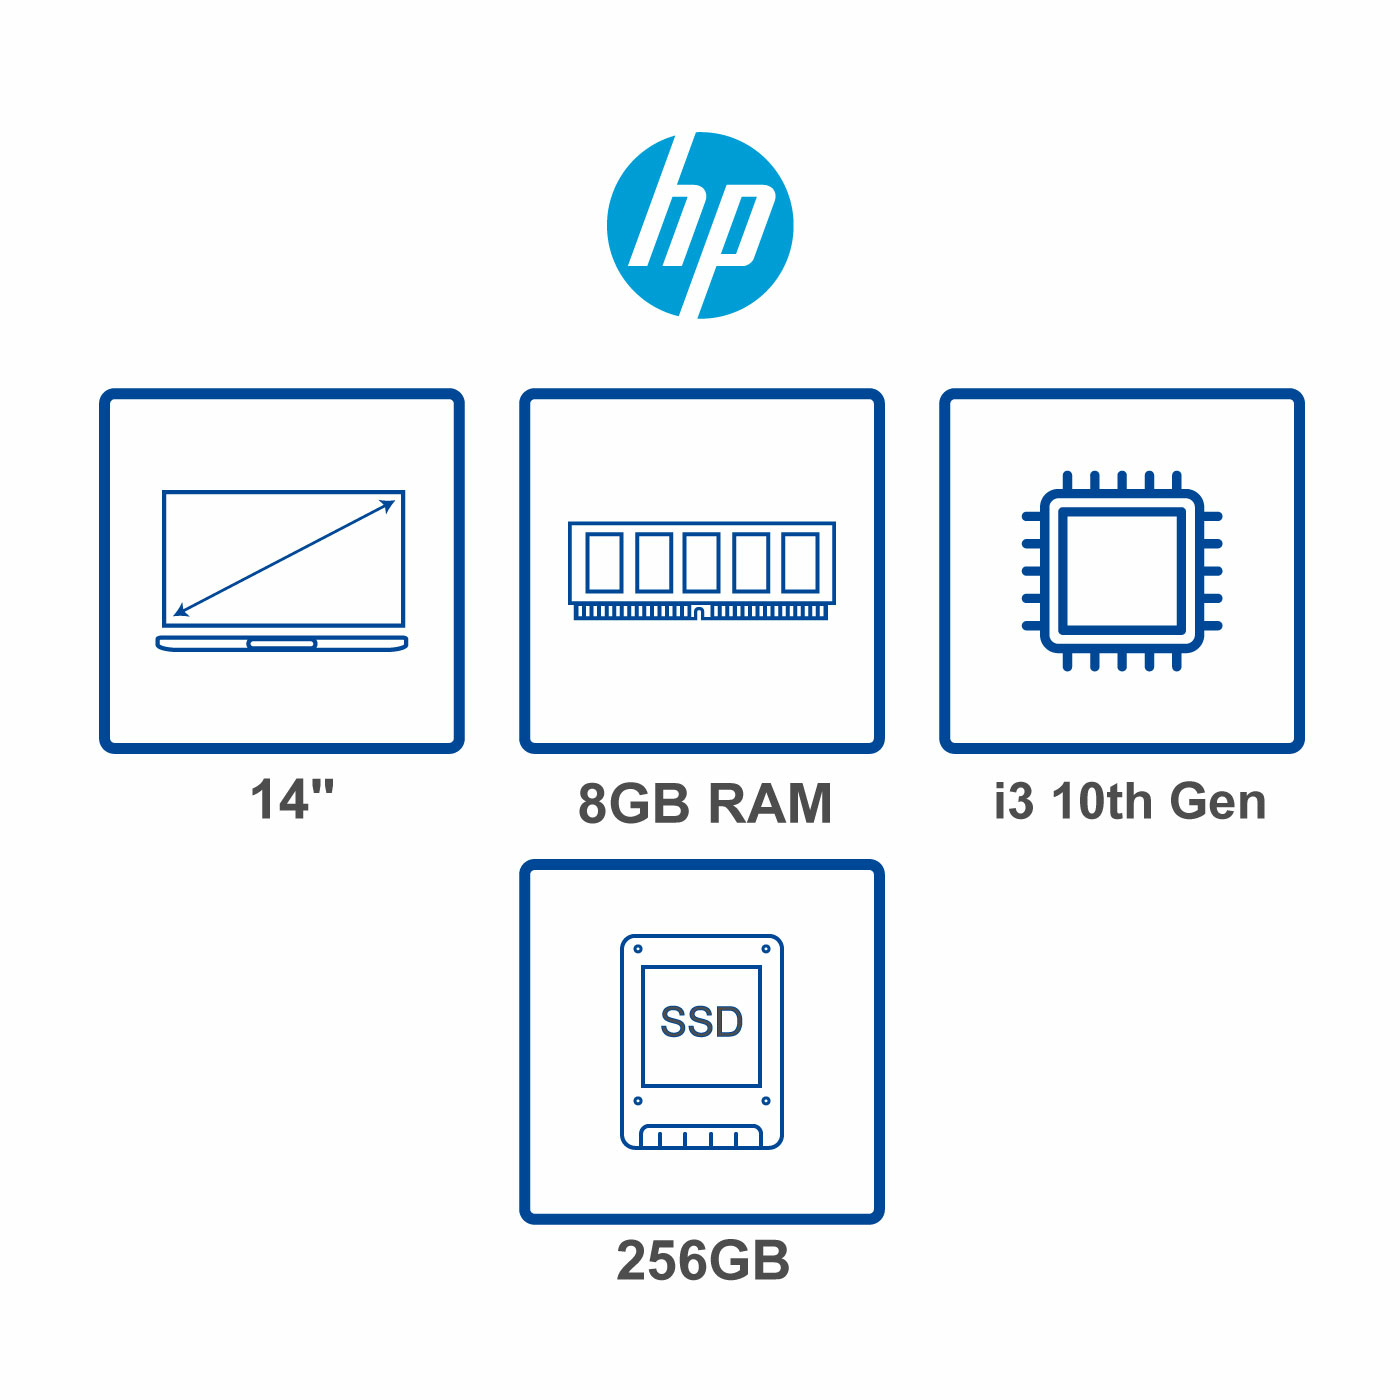 Computador Portátil HP 14" Pulgadas cf2067la - Intel Core i3 - RAM 8GB - Disco SSD 256 GB - Gris + Obsequios